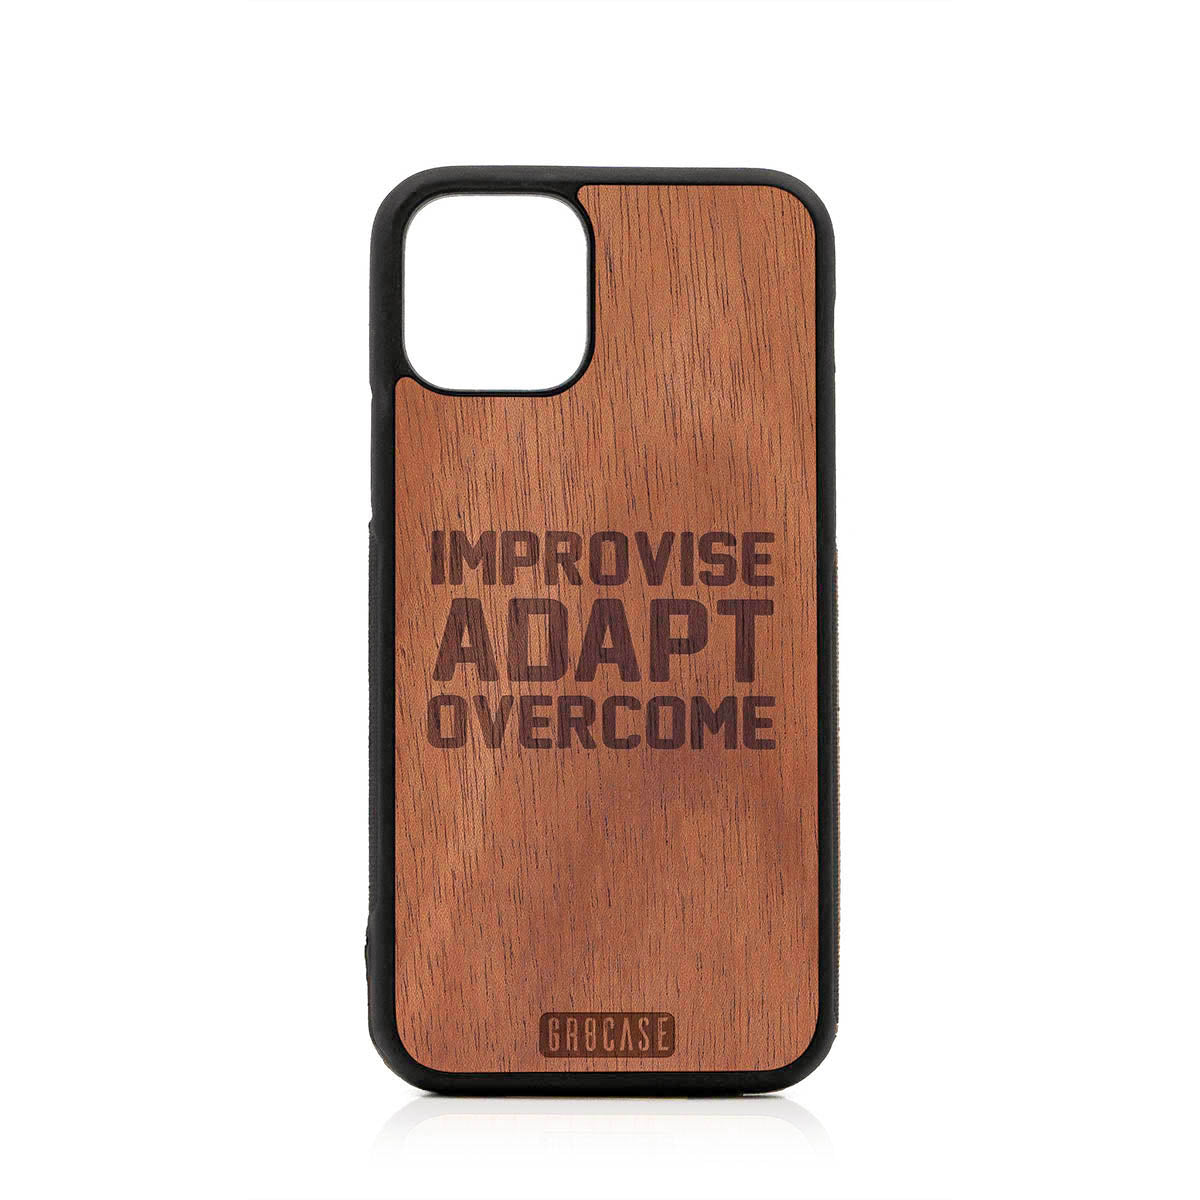 Improvise Adapt Overcome Design Wood Case For iPhone 11 Pro